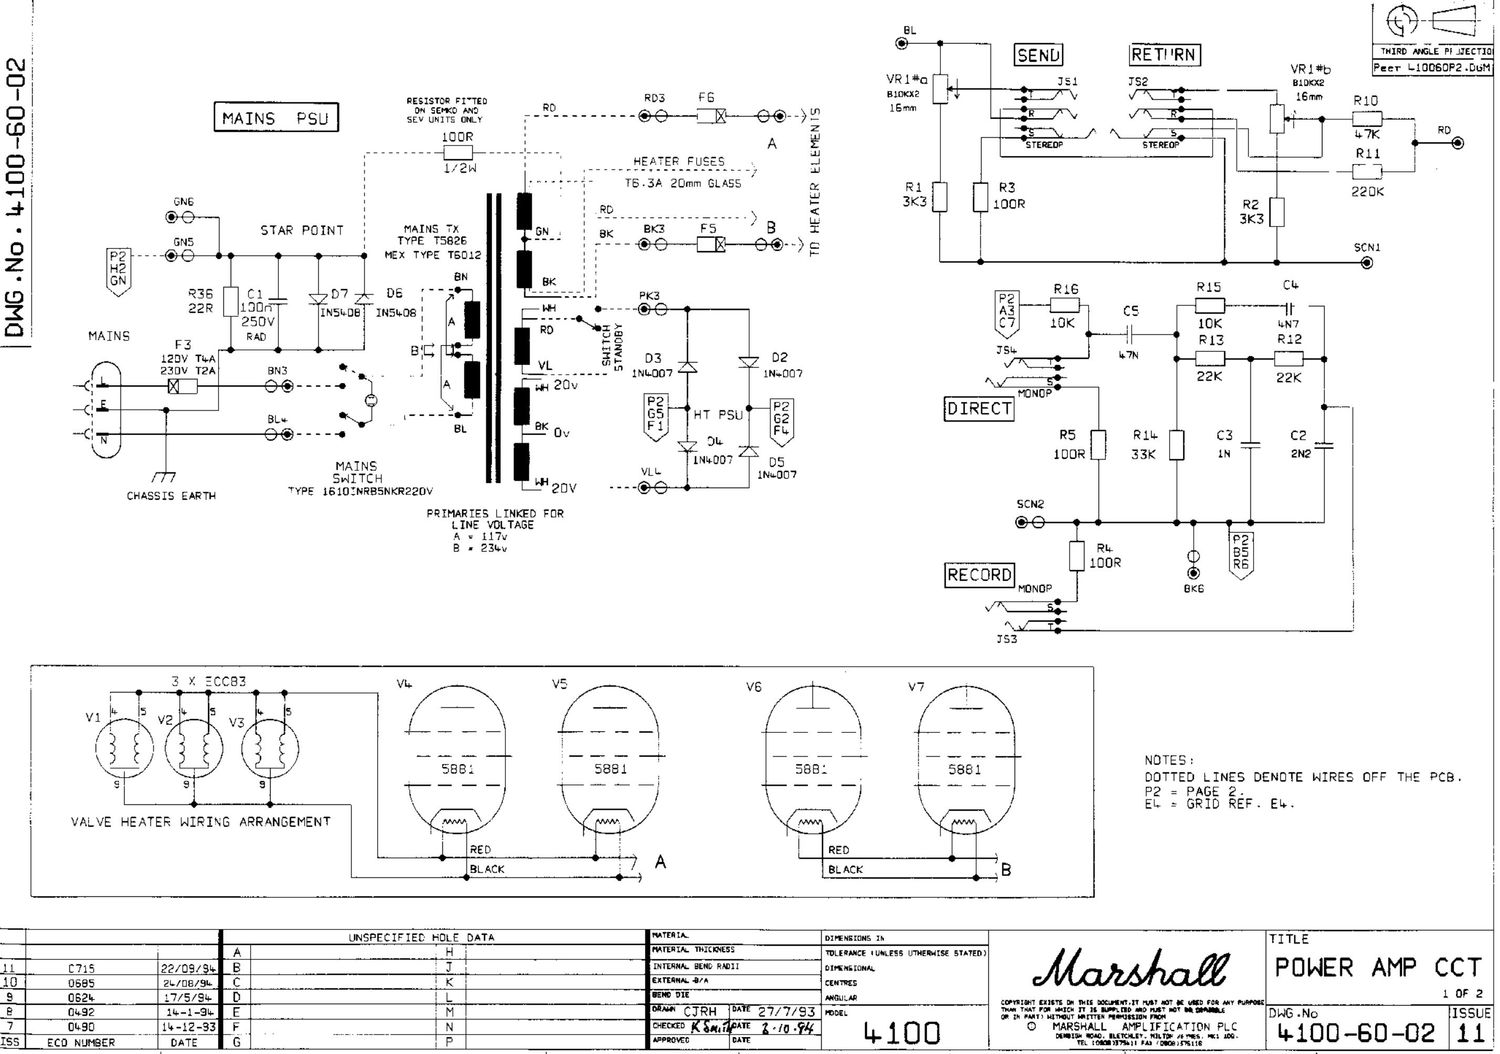 Marshall 4100 Power Amp 4100 60 02 Issue 11 Schematic